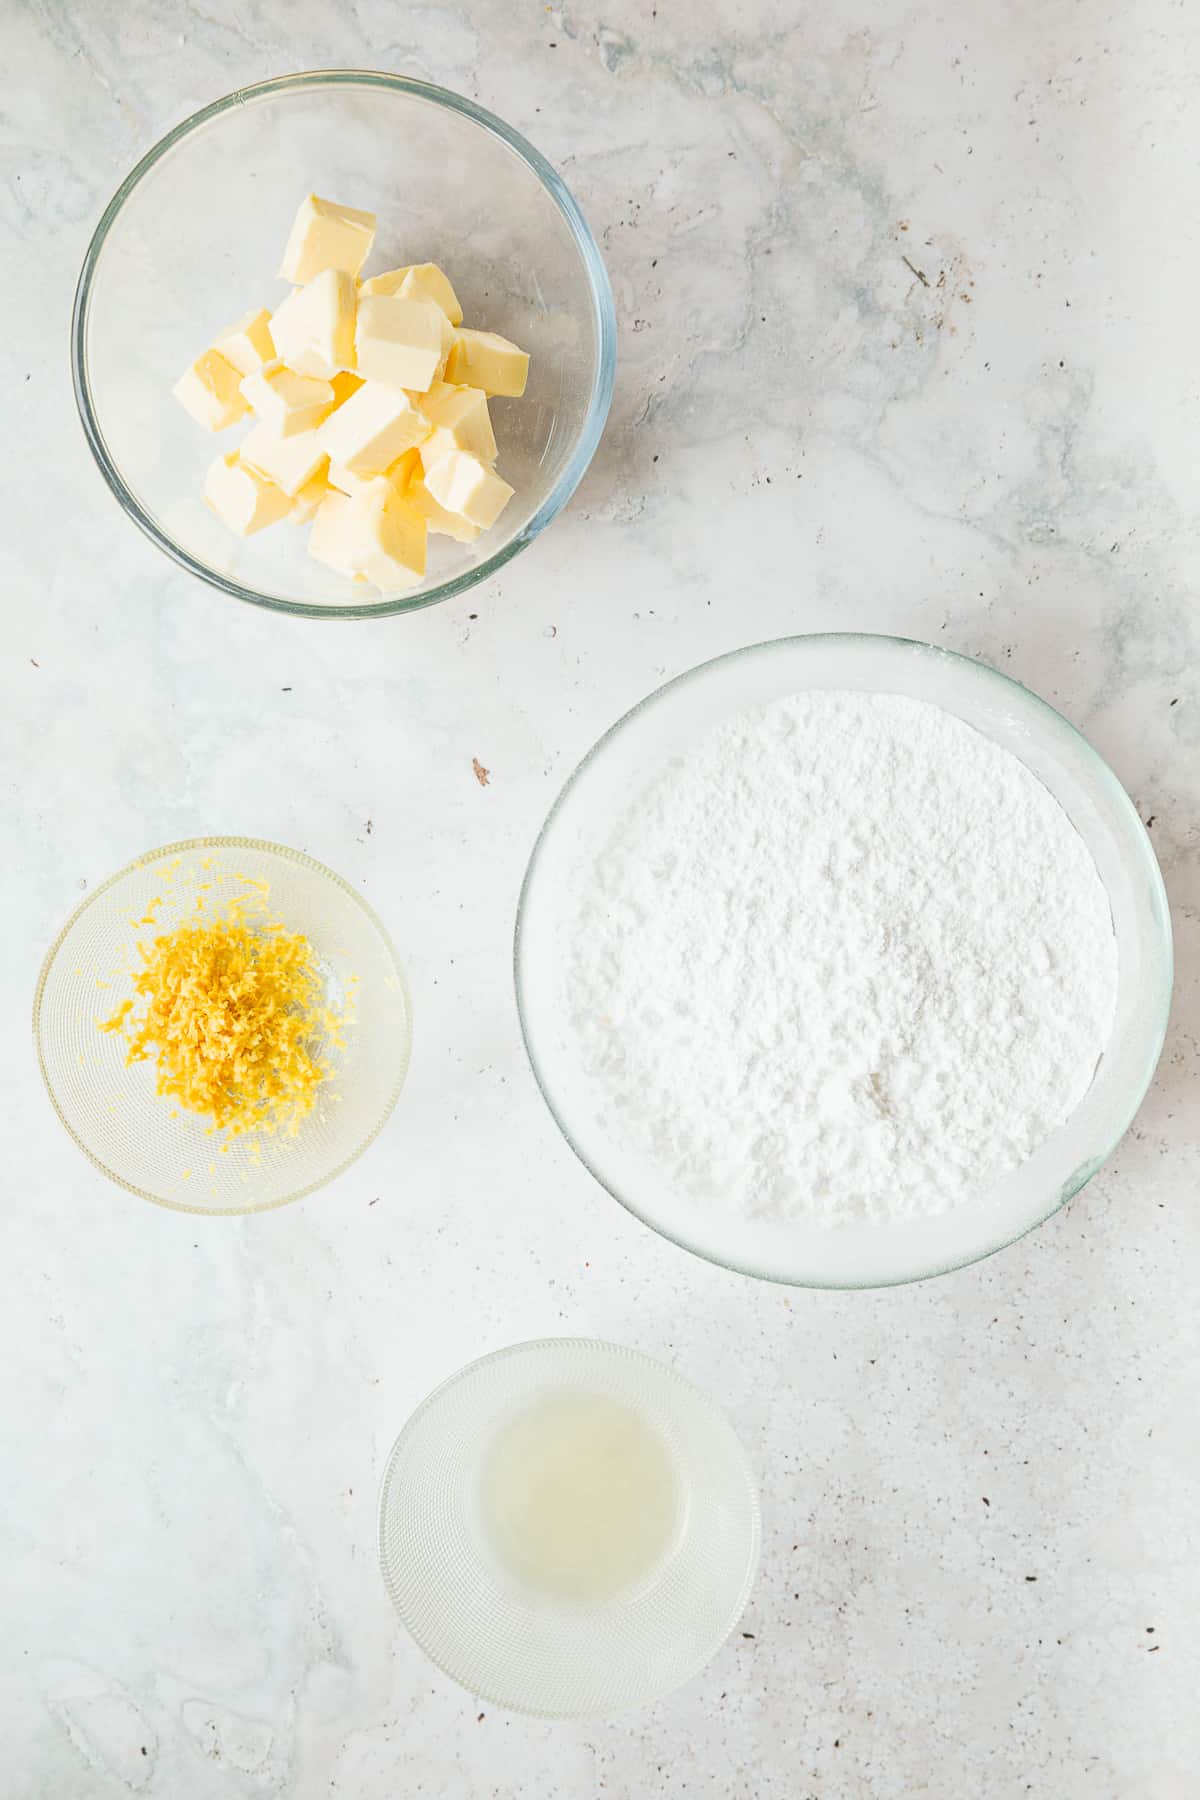 The ingredients needed to make lemon buttercream: butter, icing sugar, lemon zest and lemon juice. 